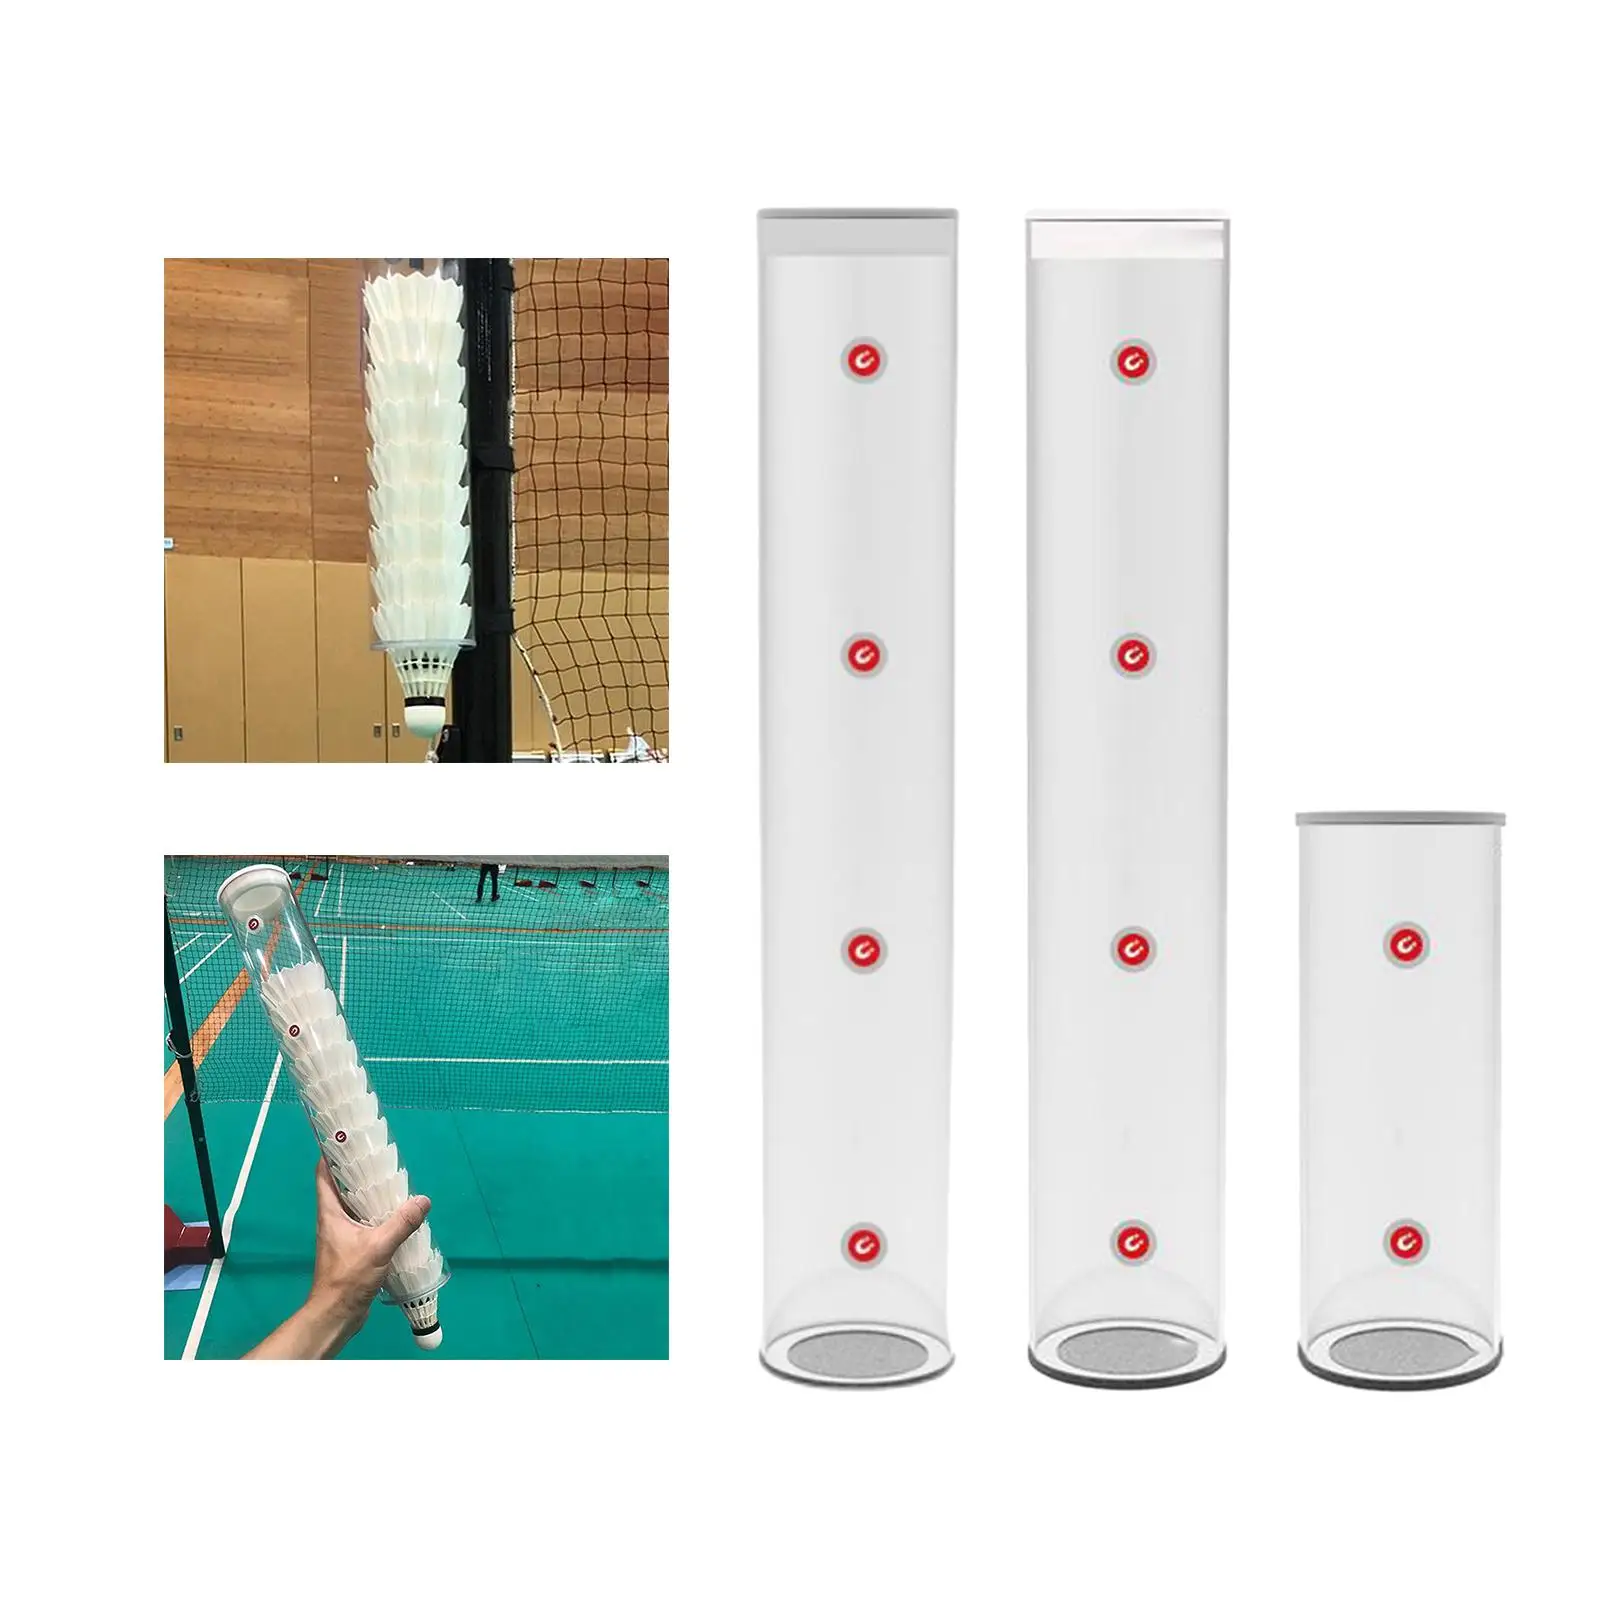 Ball Barrel Badminton Cylinder Badminton Game Gym Equipment Sports Portable Accessories Durable Indoor Training Badminton